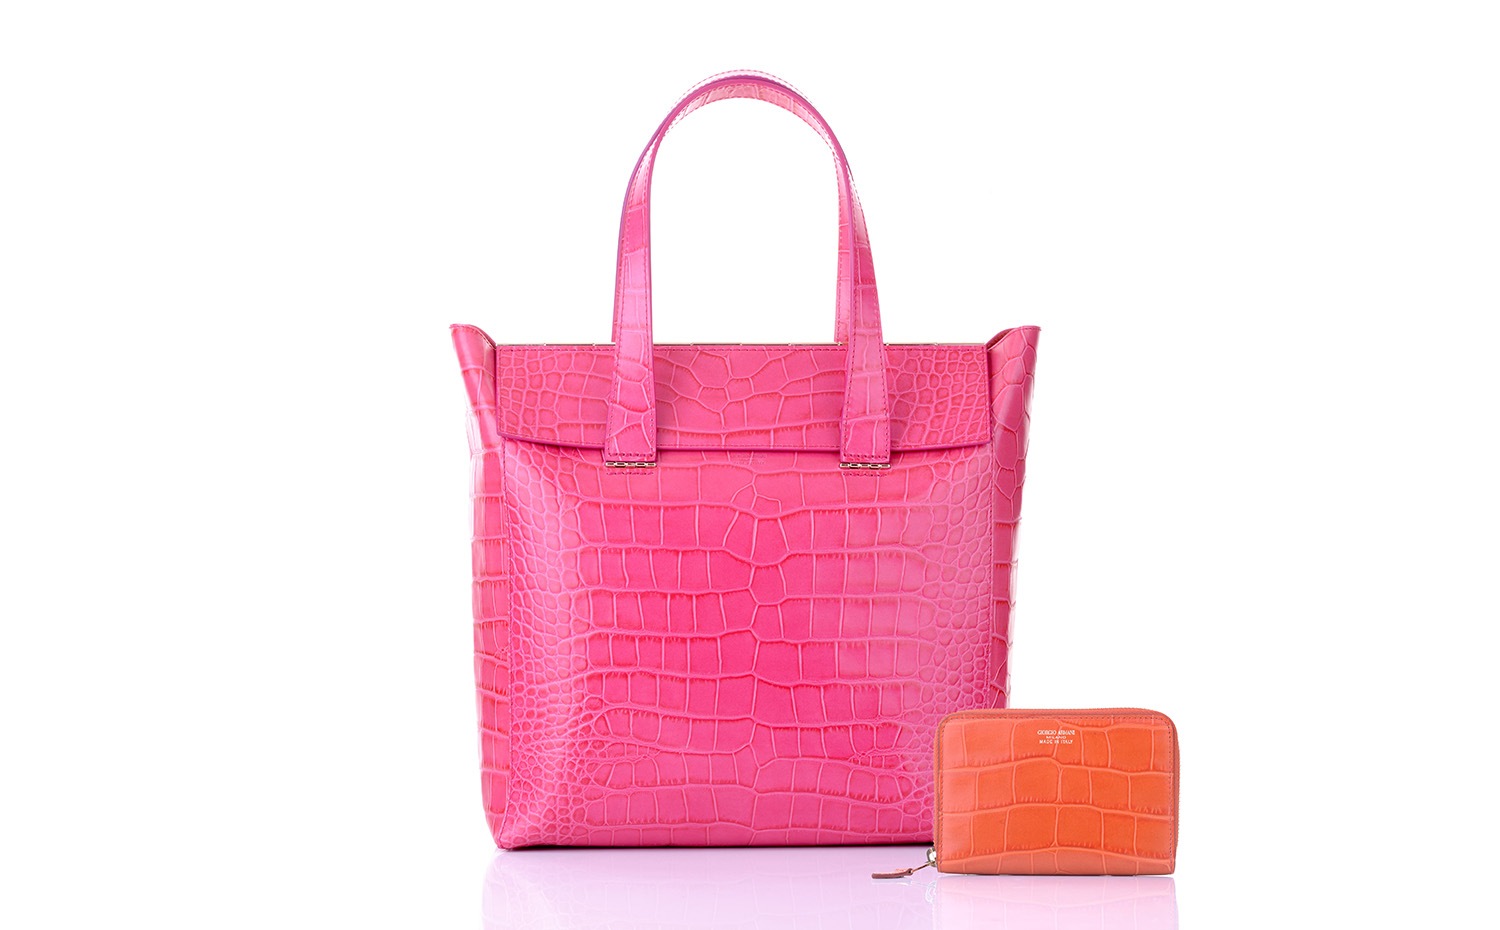 Armani/Marina Bay: Giorgio Armani Mock Croc Shopper bag with a zip around wallet